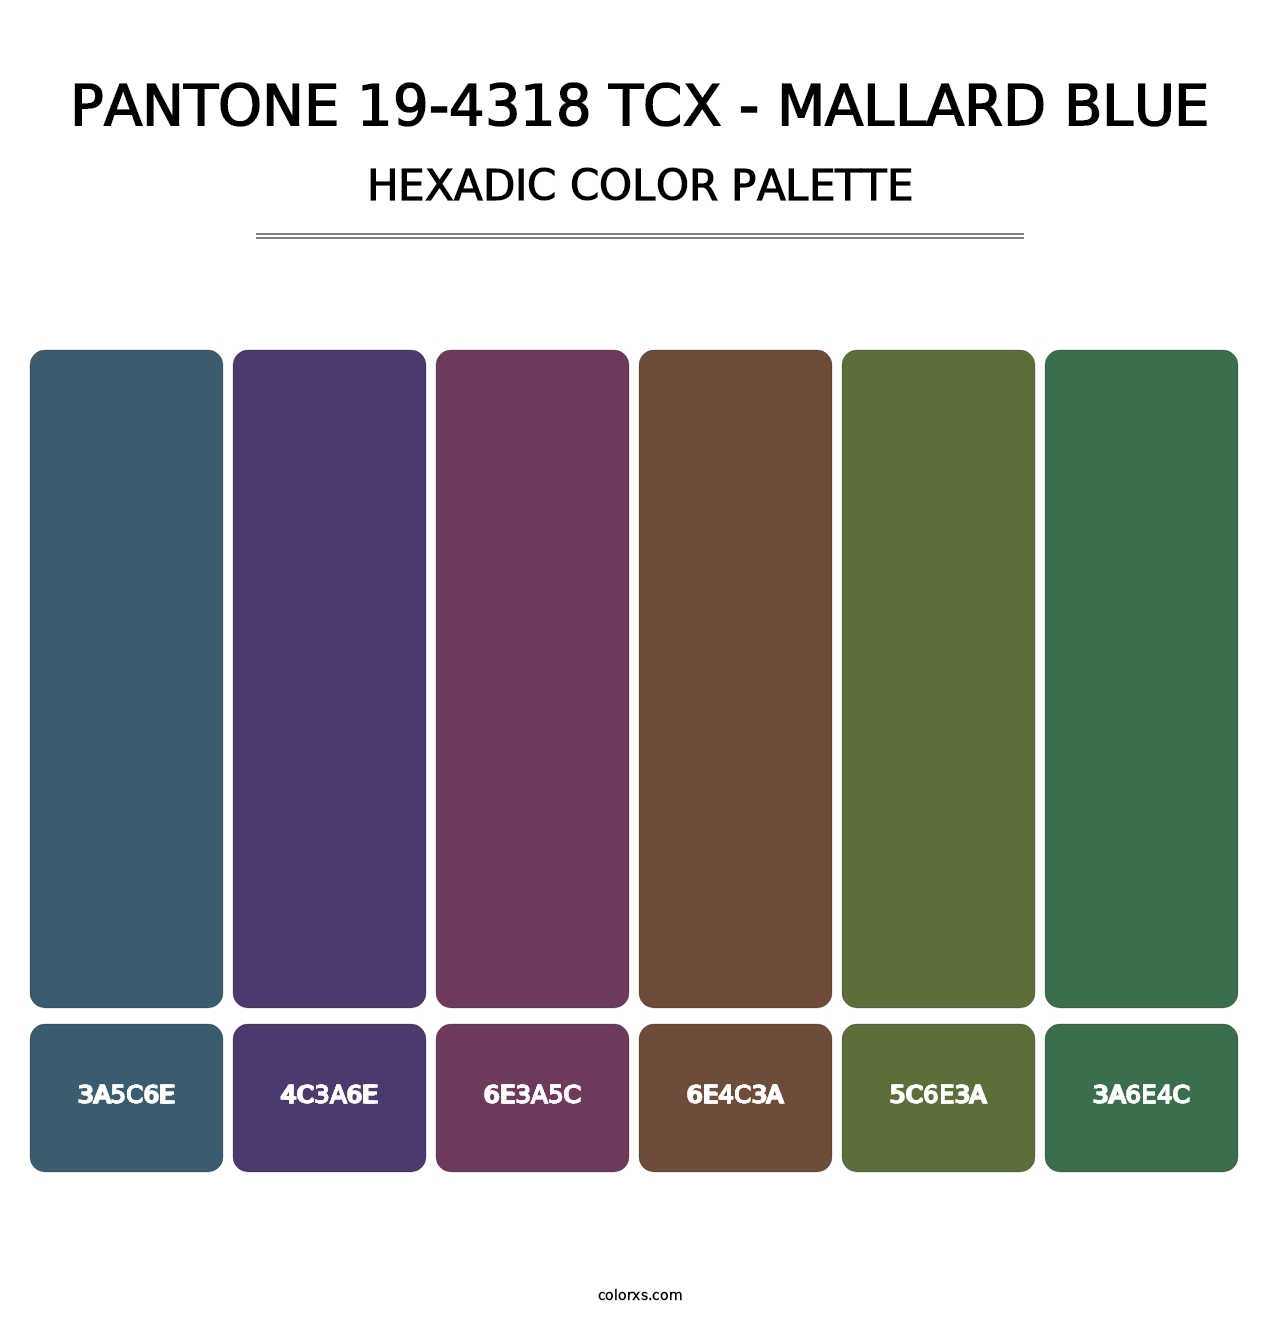 PANTONE 19-4318 TCX - Mallard Blue - Hexadic Color Palette